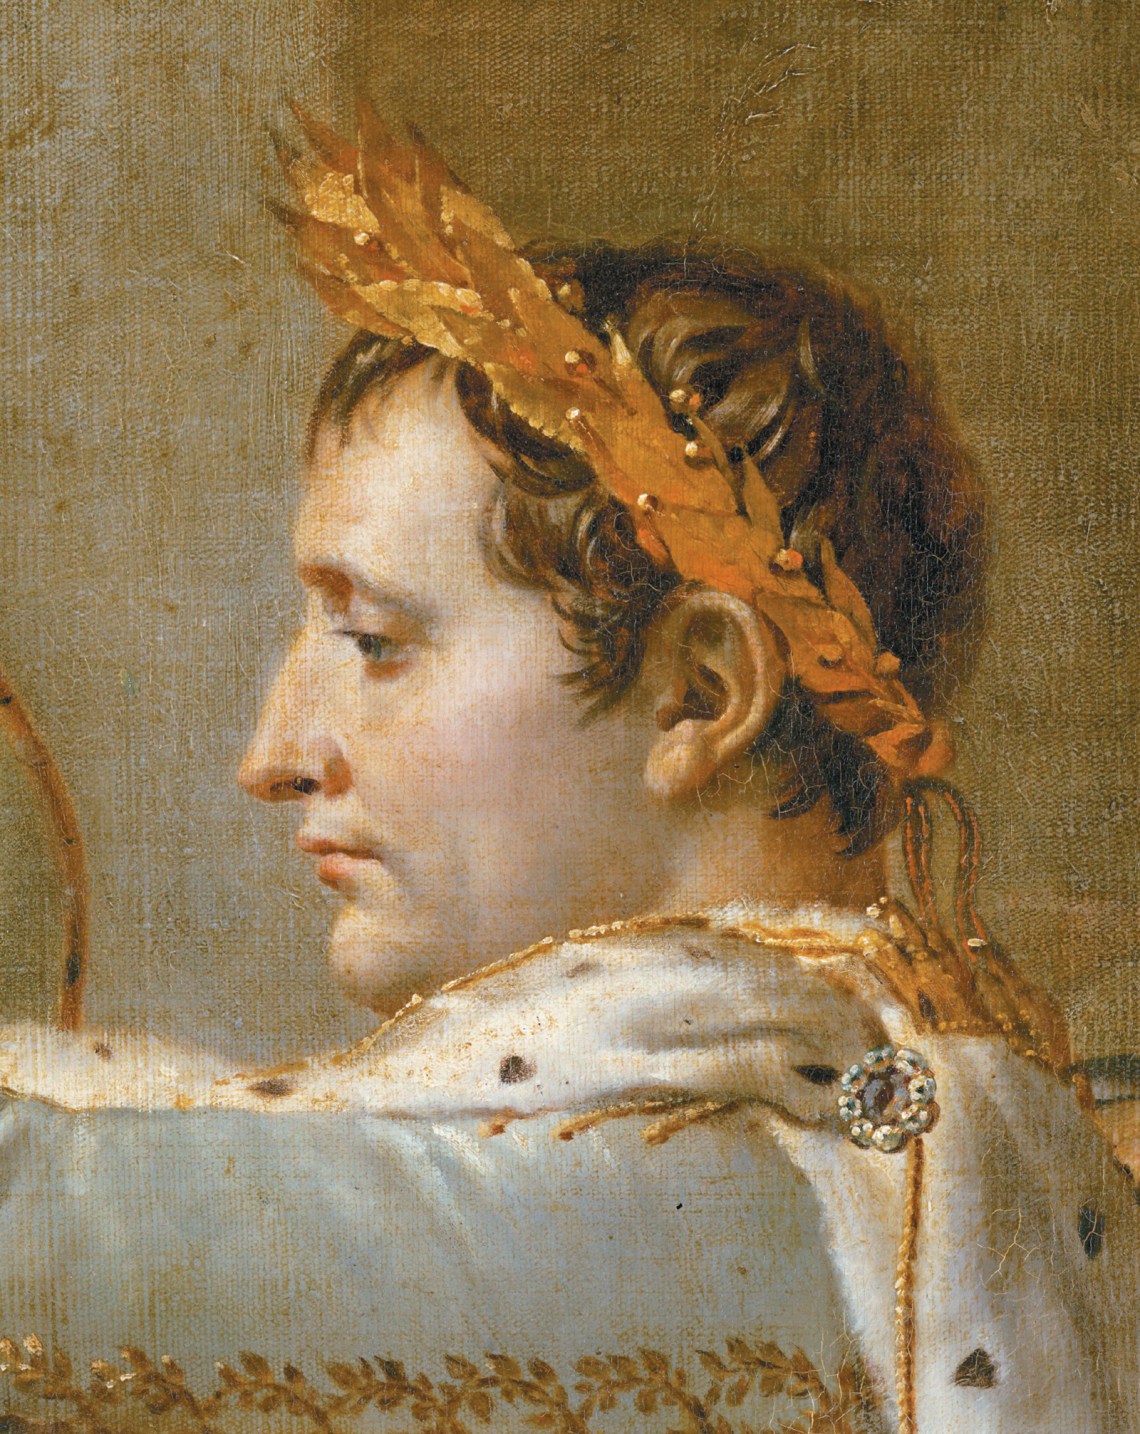 Napoleon: The Unsolved Enigma